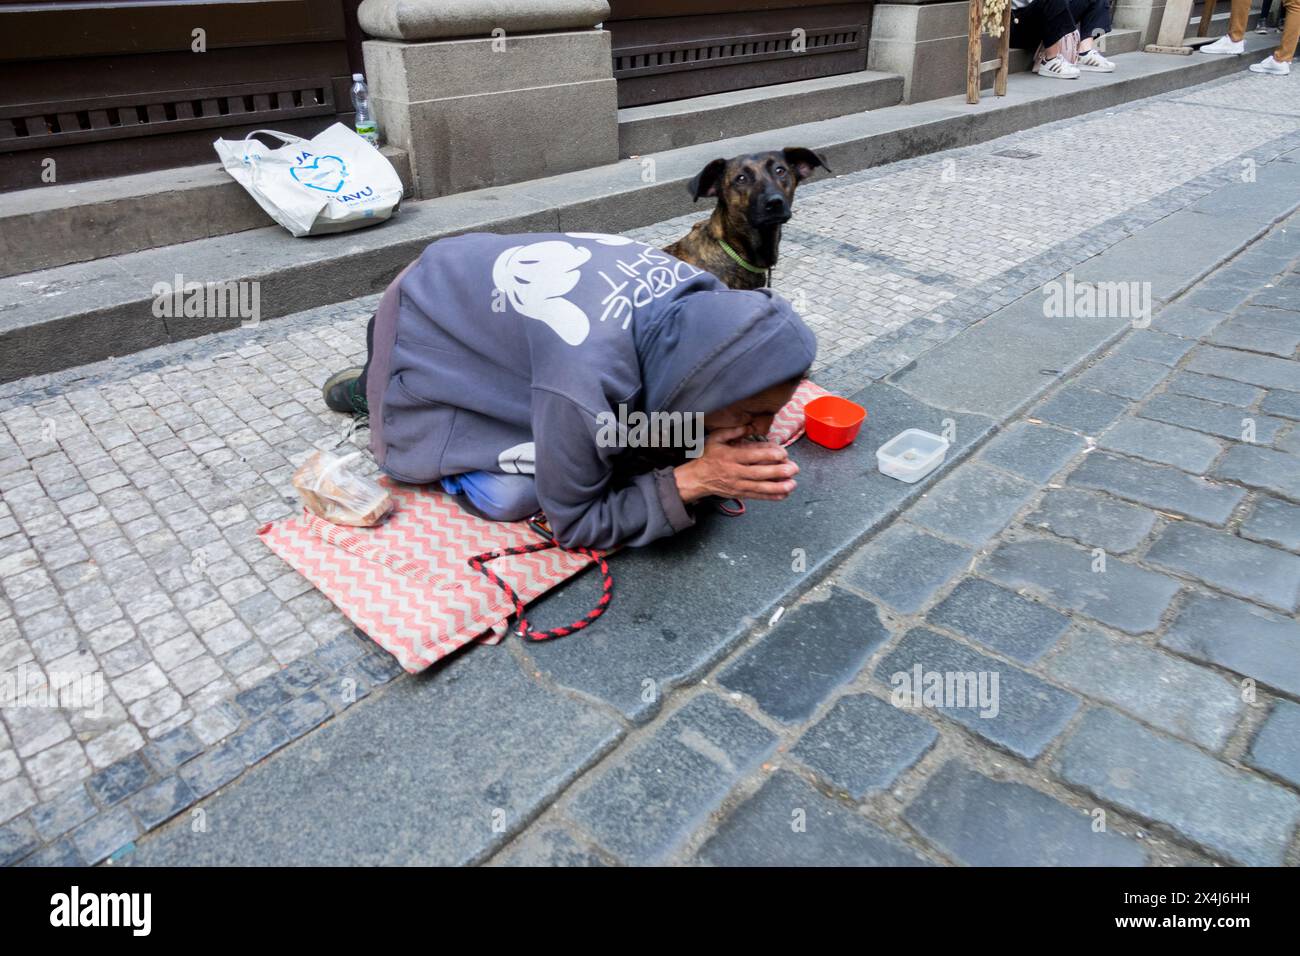 Homeless Man with Dog Panhandler Beggar Street Begging Stock Photo